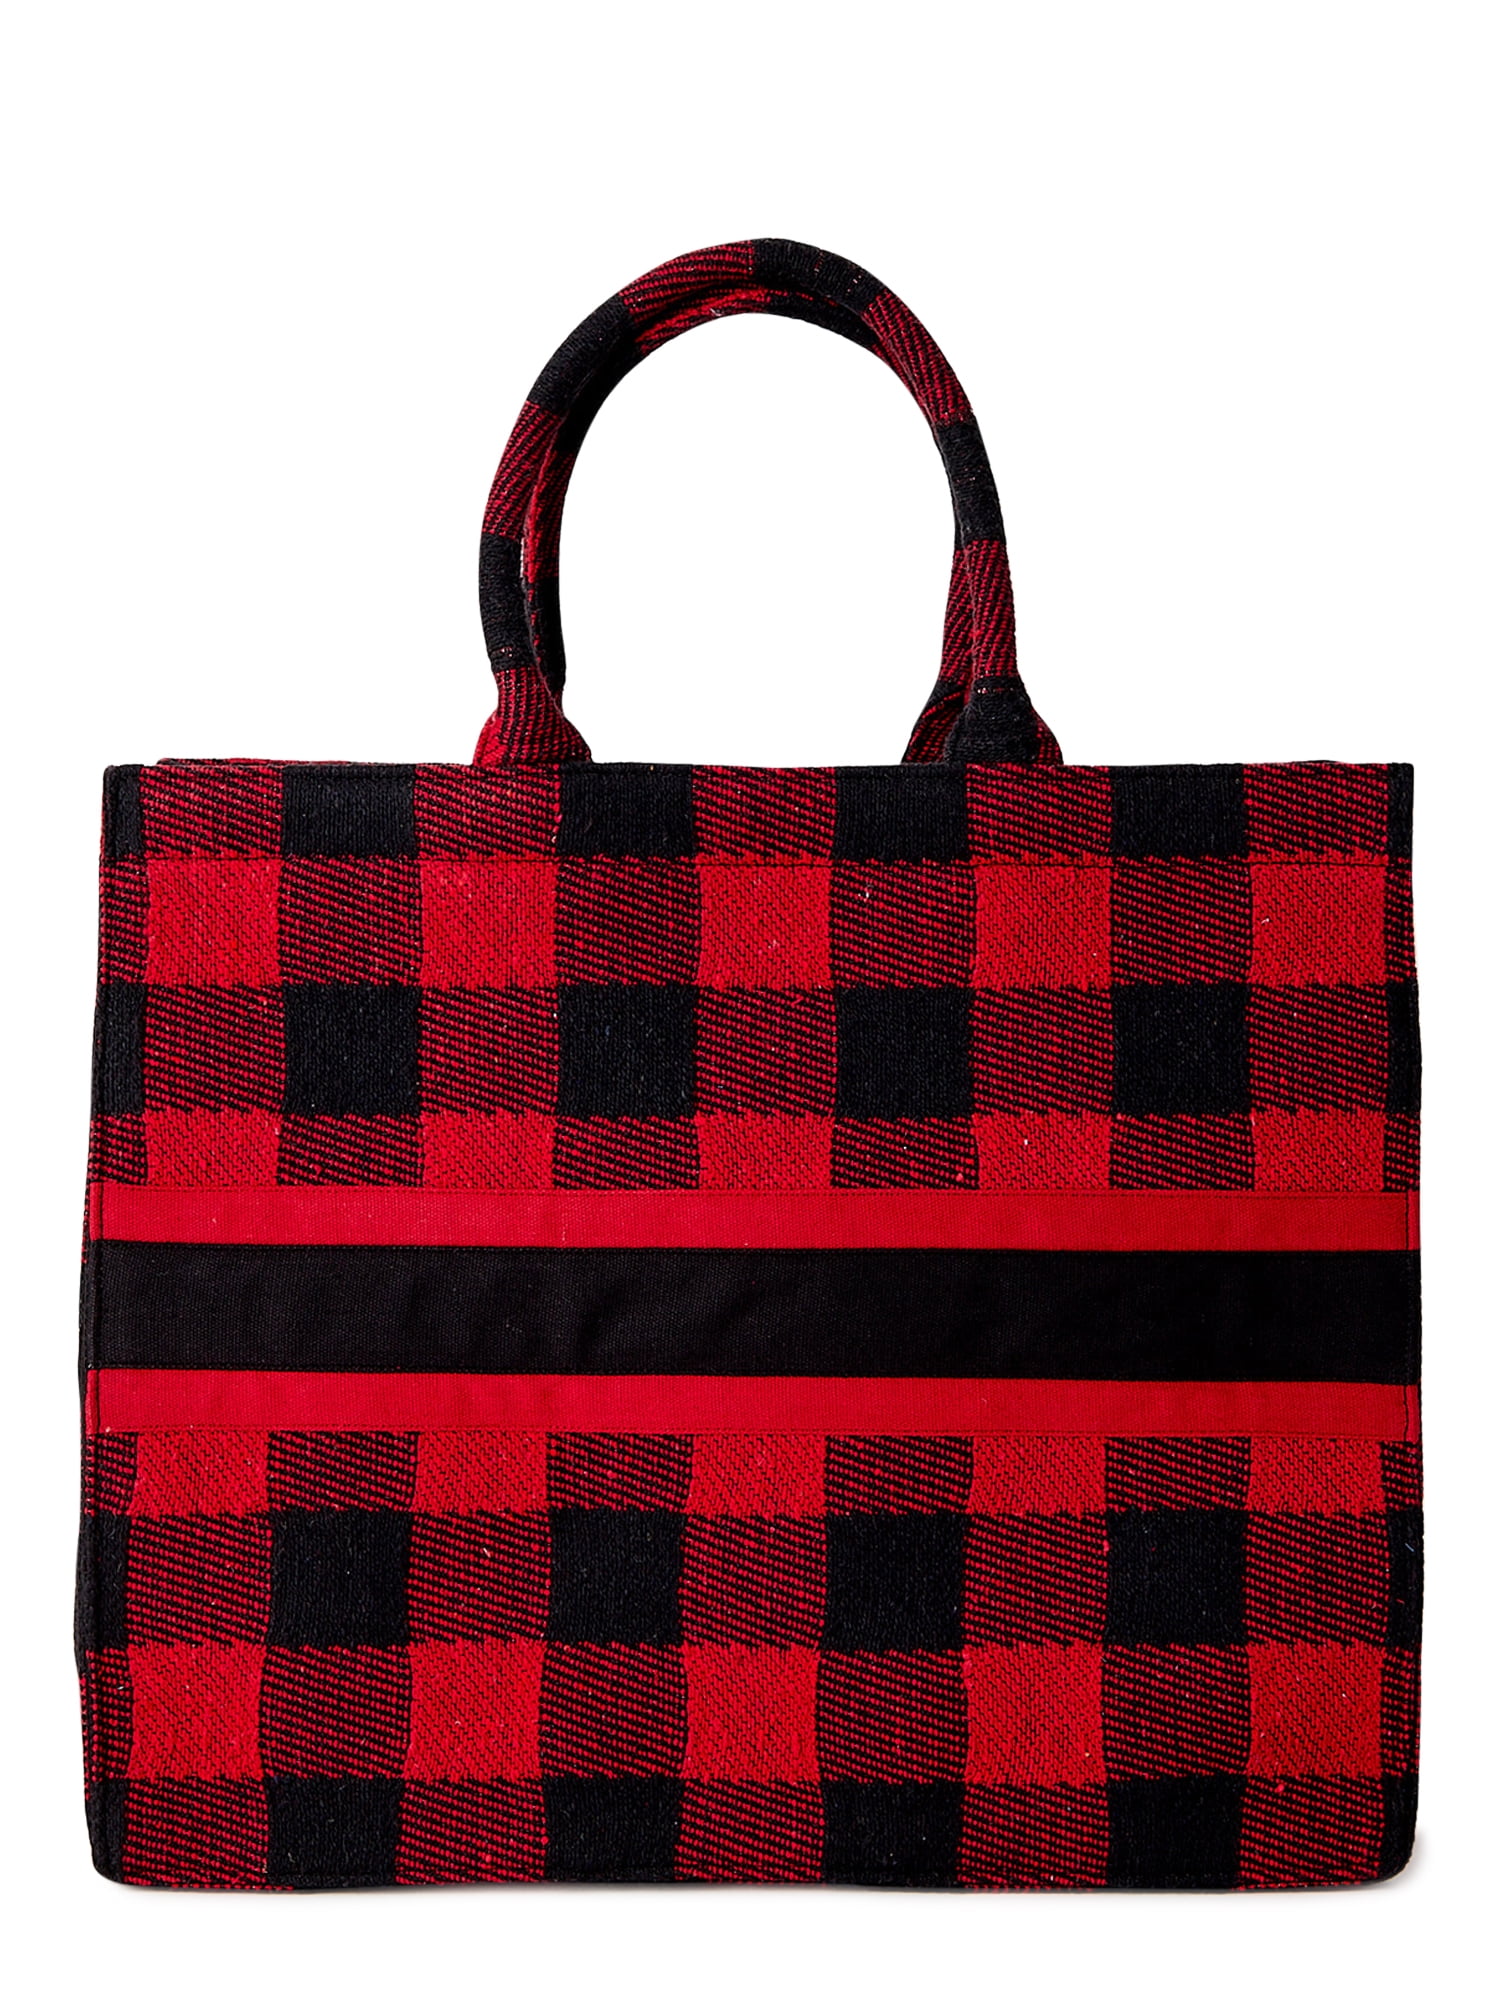 Product Men - Bags - Be True Tote Bag Red